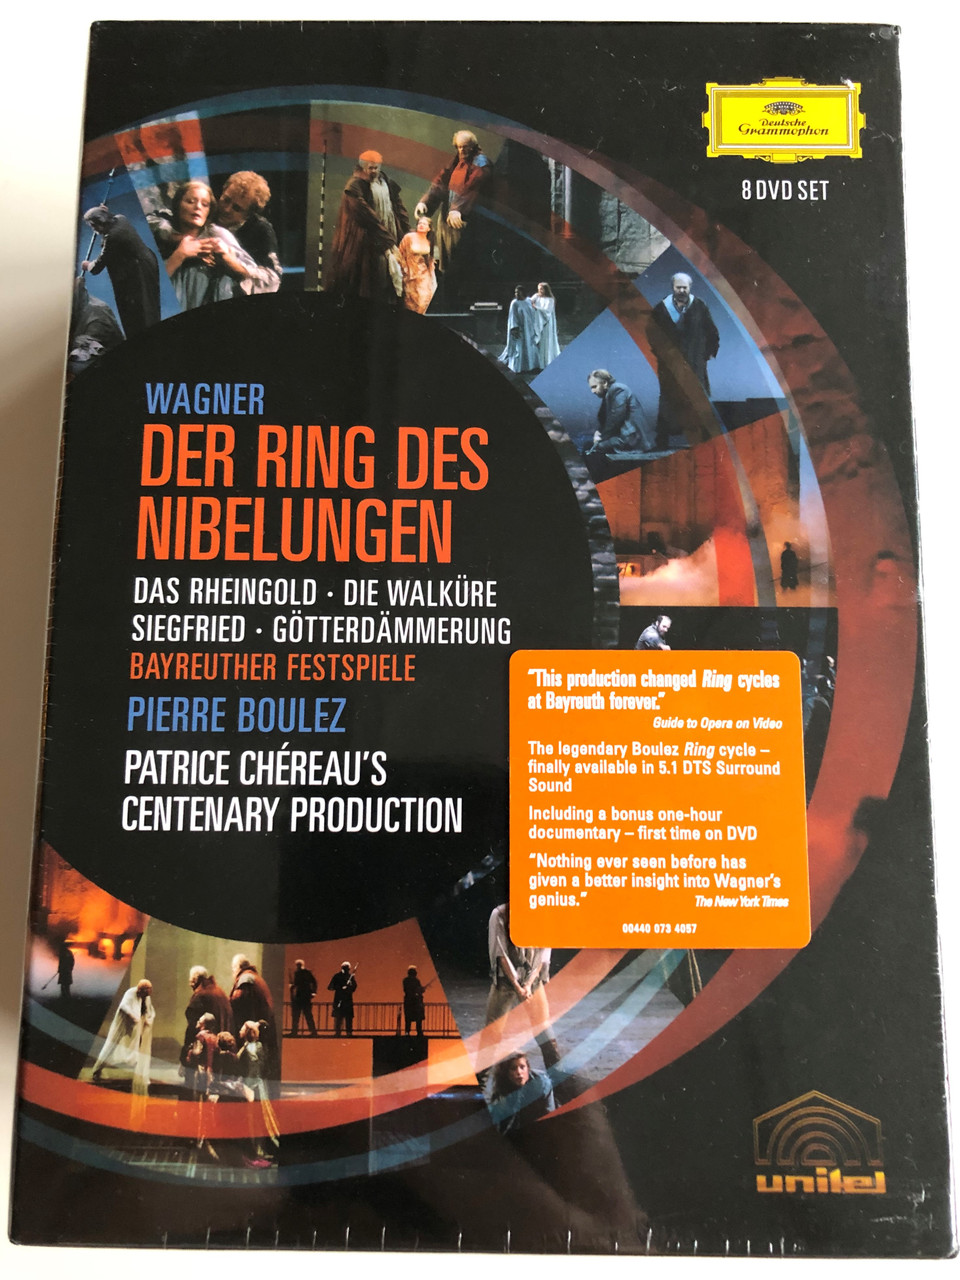 Giftig Staat slijtage R. Wagner - Der Ring des Nibelungen 8 DVD SET Bayreuther Festspiele /  Pierre Boulez / Directed by Brian Large / Patrice Chéreau's Centenary  Production / Bonus - Making of the Ring documentary - bibleinmylanguage